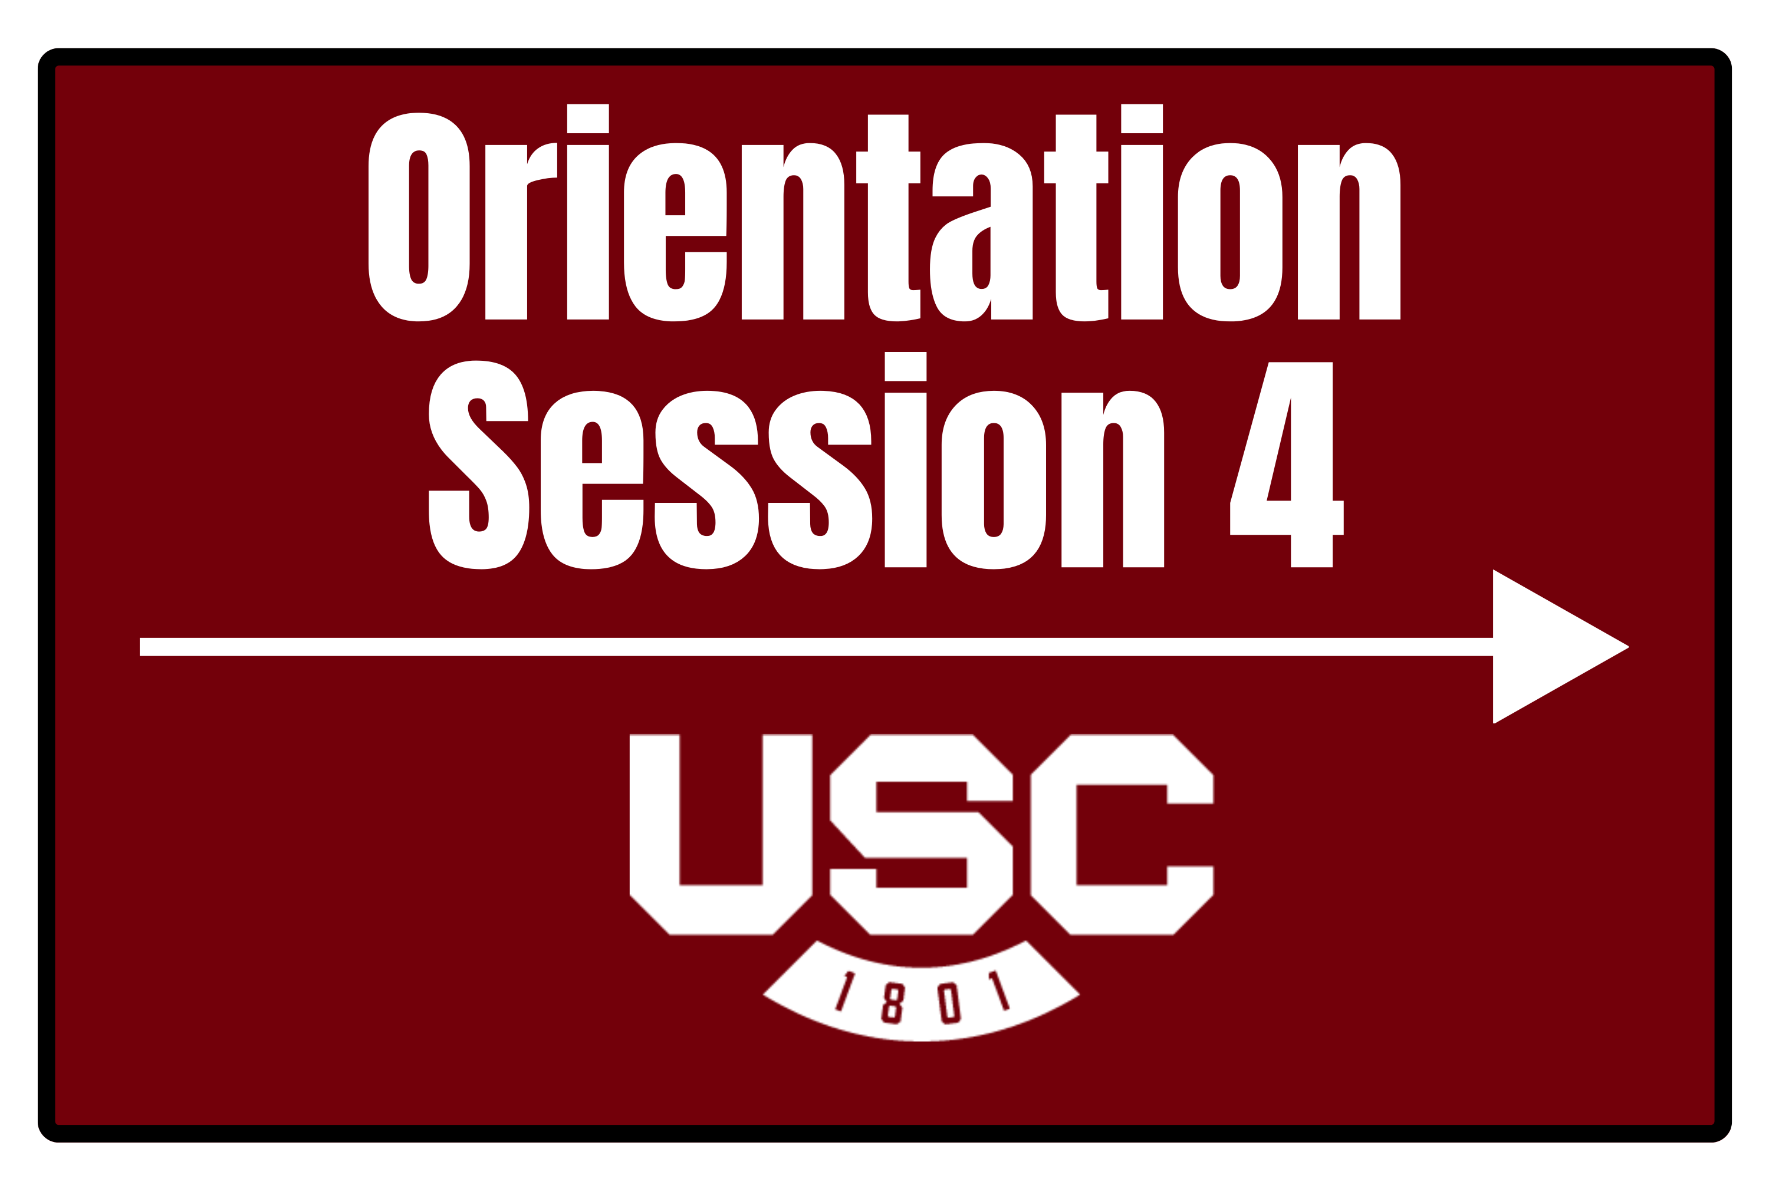 Orientation Session 4: June 5 - 6